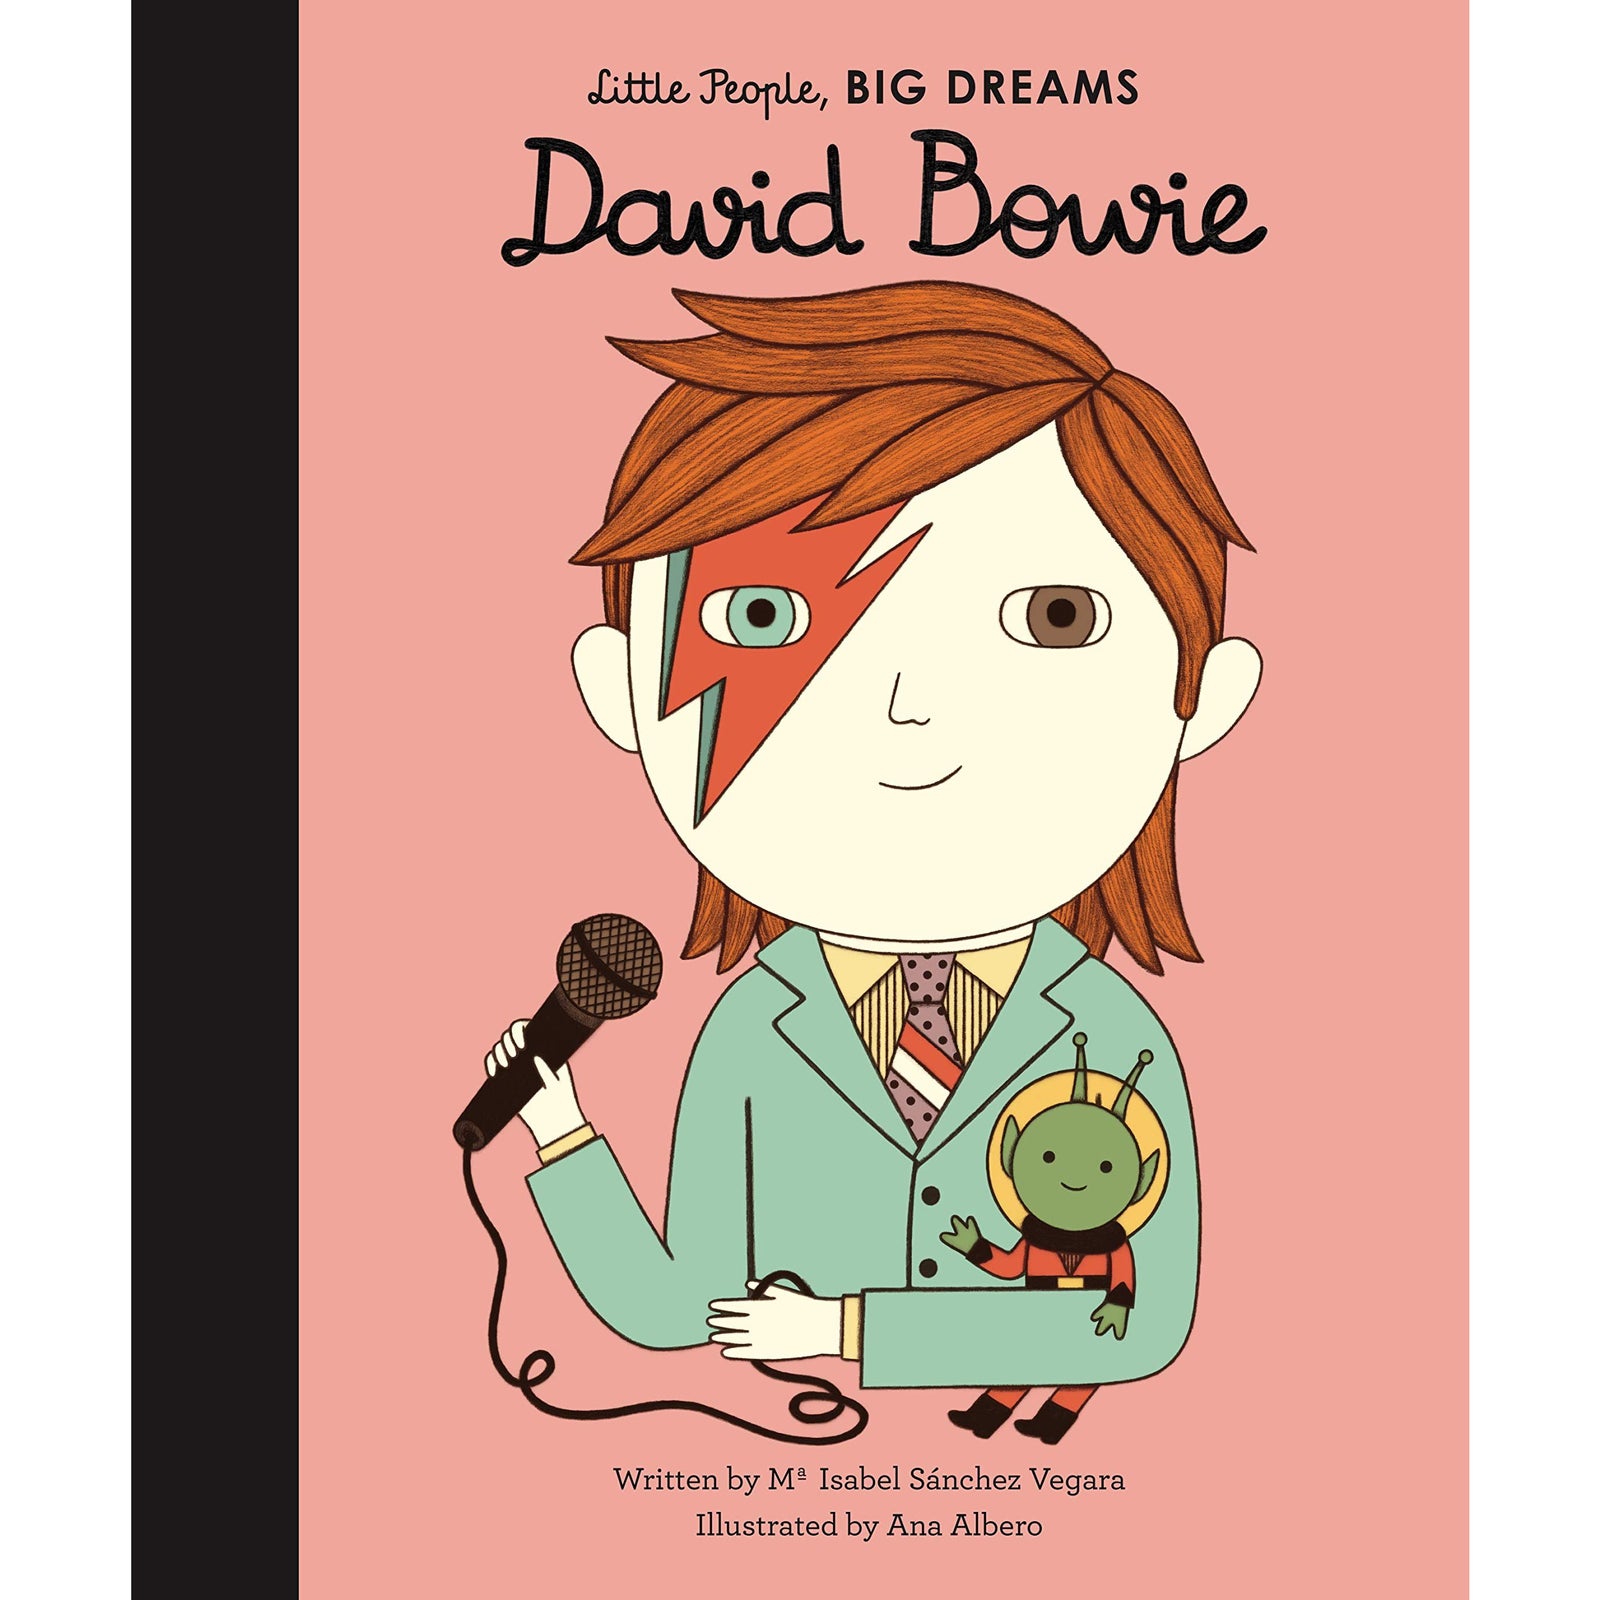 David Bowie (Little People, Big Dreams) Book